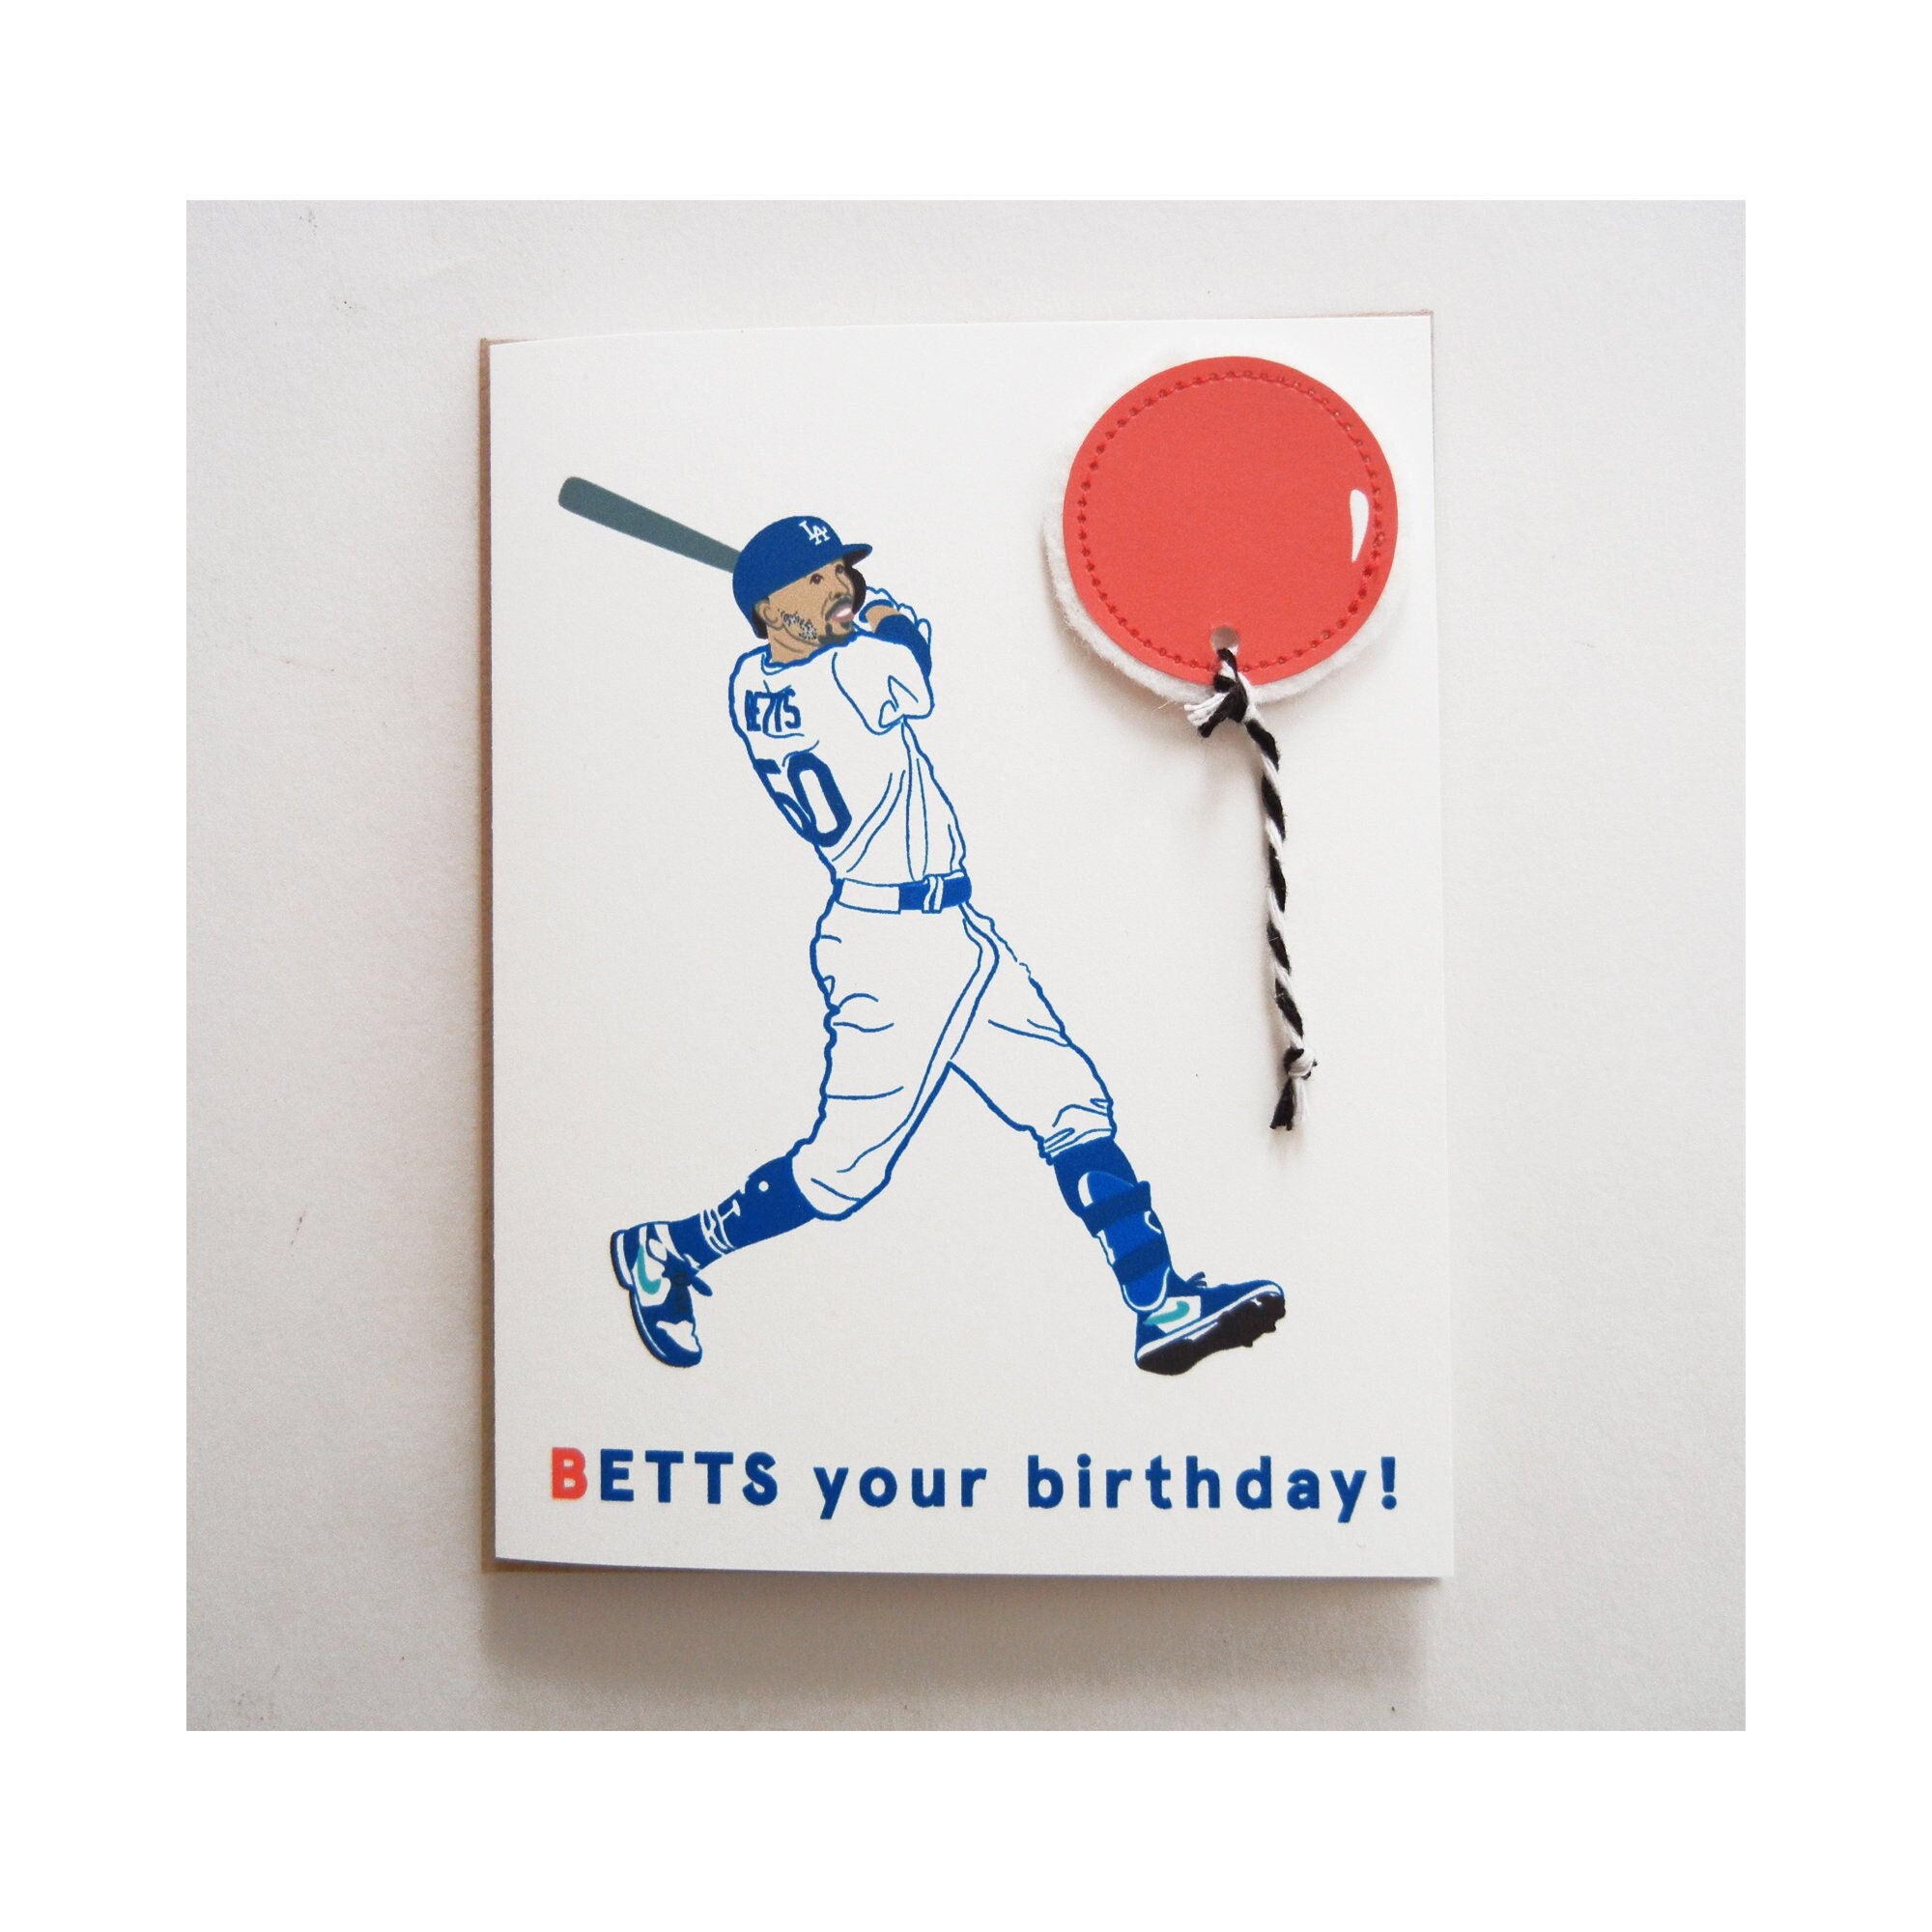 Birthday Balloon Card Printed Card Envelope Betts Your Birthday / LA Dodgers /Felt Applique Mookie Betts Baseball Player Illustration